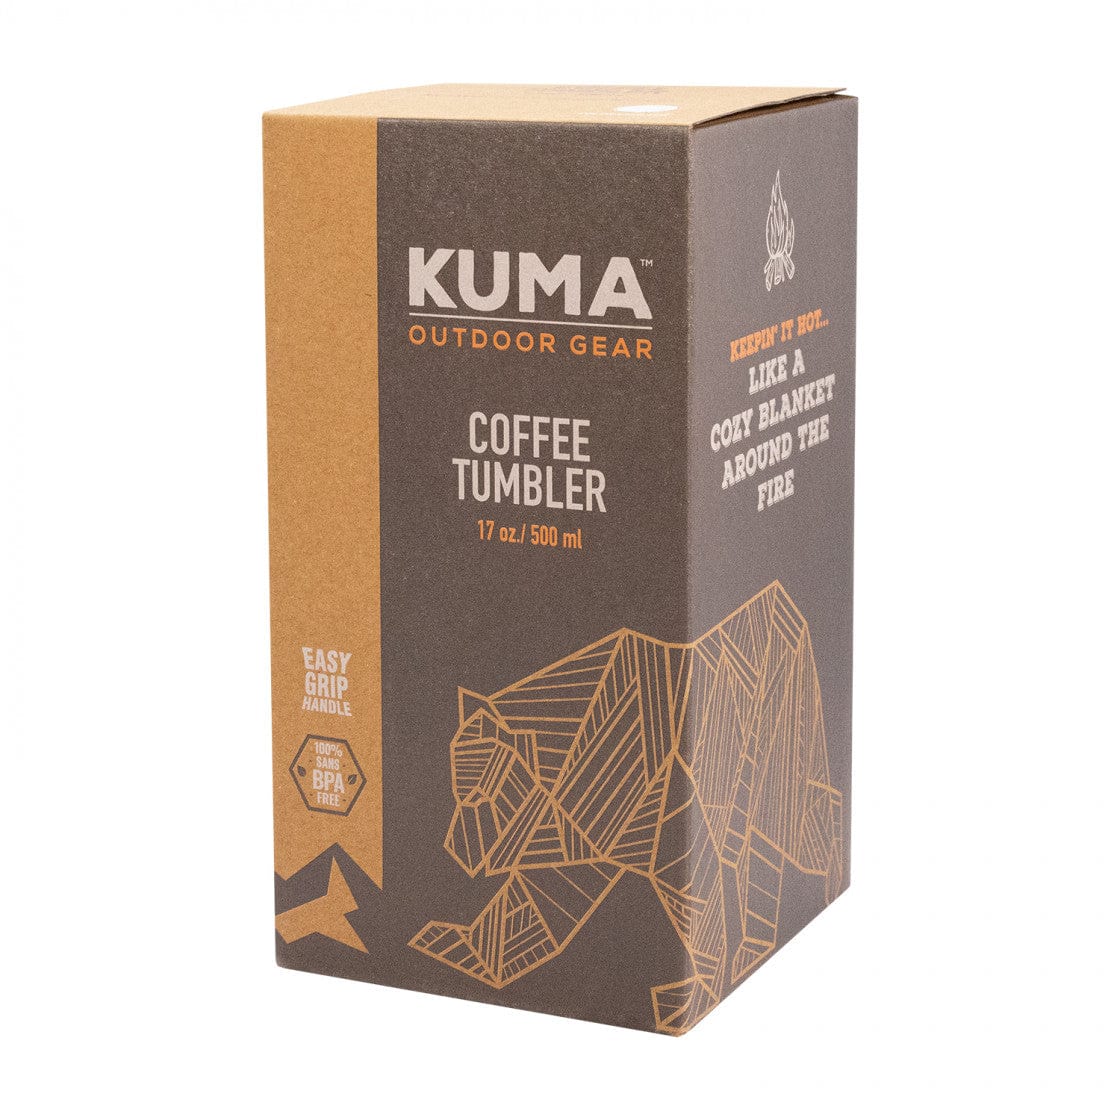 Kuma Outdoor Gear Qualifies for Free Shipping Kuma Outdoor Gear Coffee Tumbler 17 oz White #KM-CT-WH